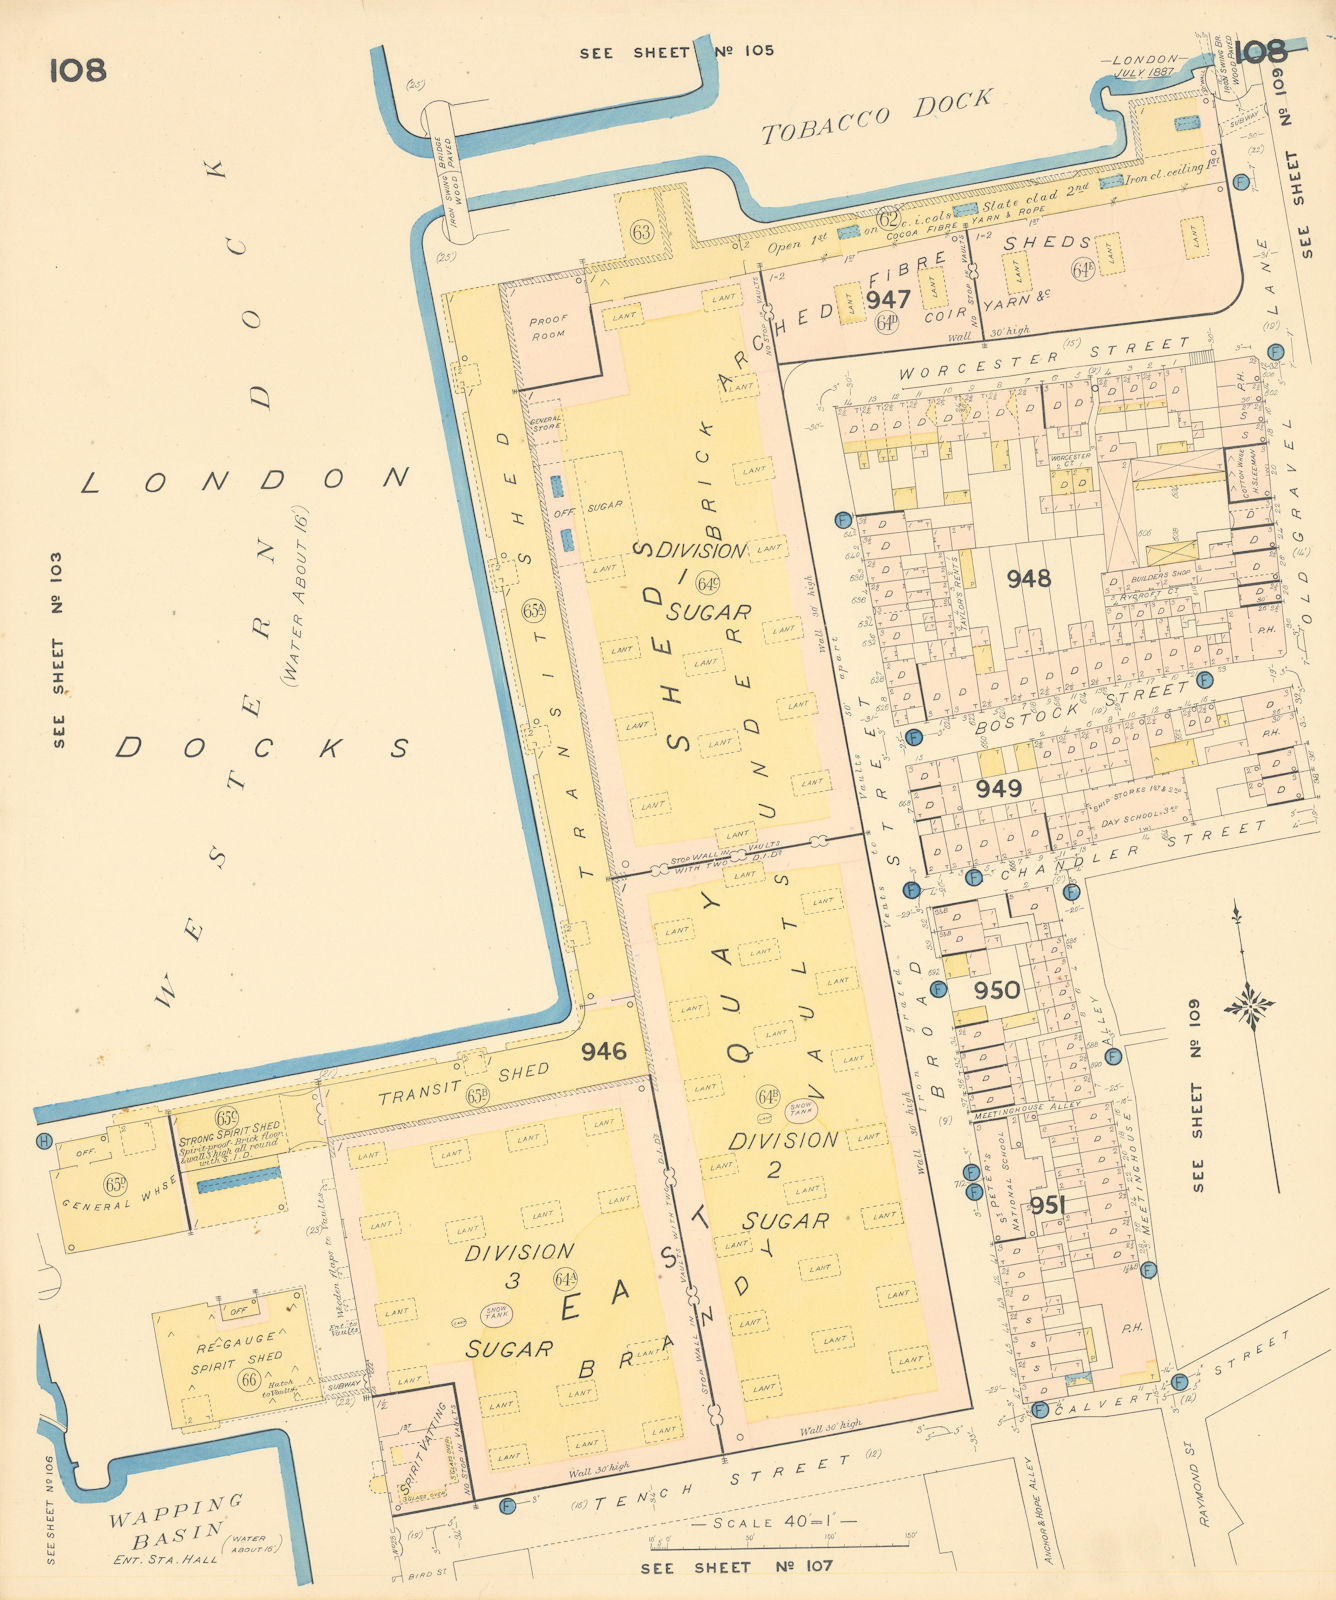 Wapping Basin London & Tobacco Docks. Reardon Street. Goad Insurance map 1887